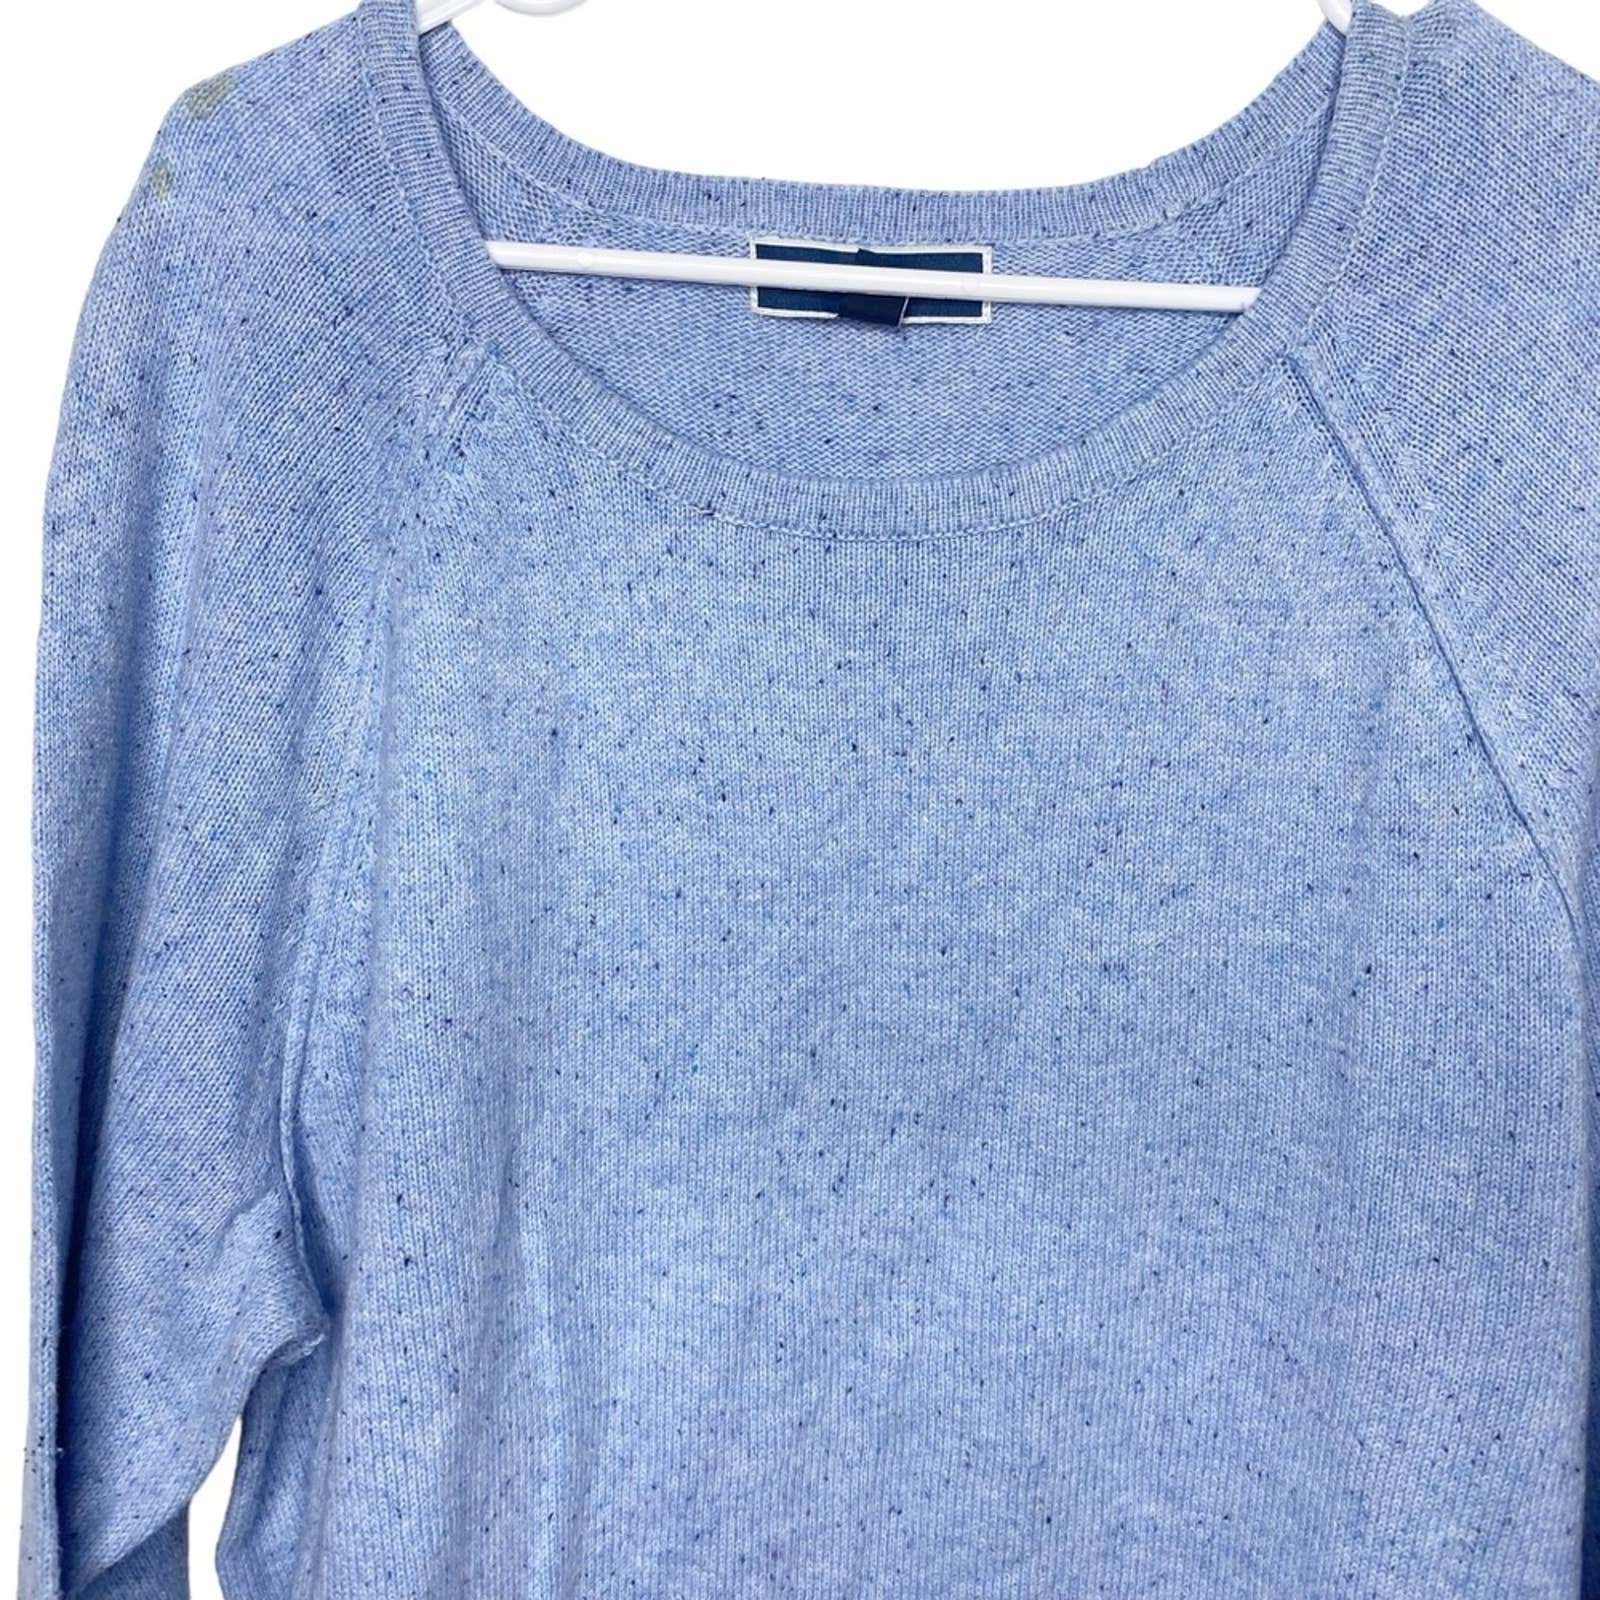 Elegant Karen Scott blue heather sweater size 0X NWT fPhQWJv7a High Quaity